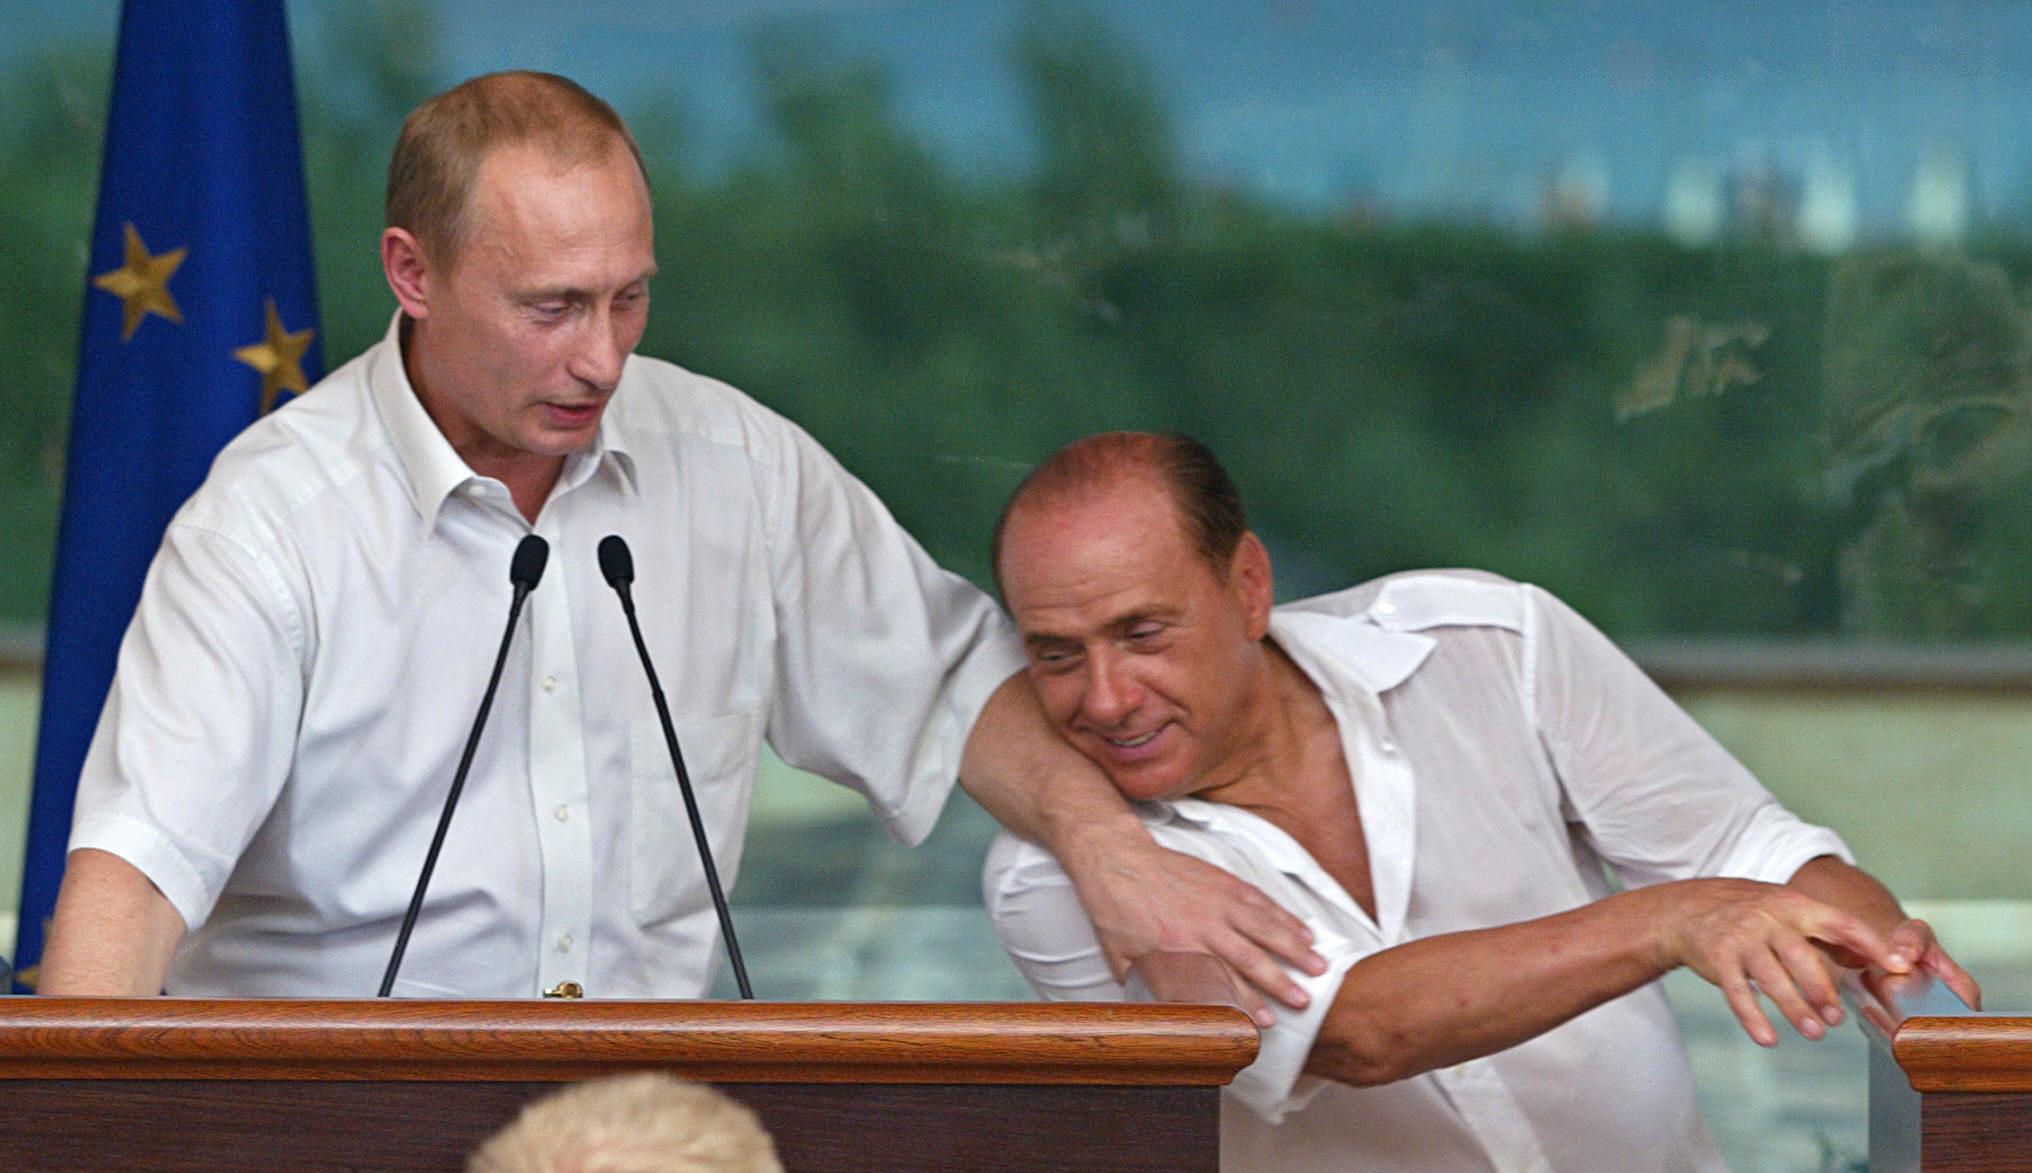 Berlusconi and Putin joke during a 2003 press conference in Sardinia